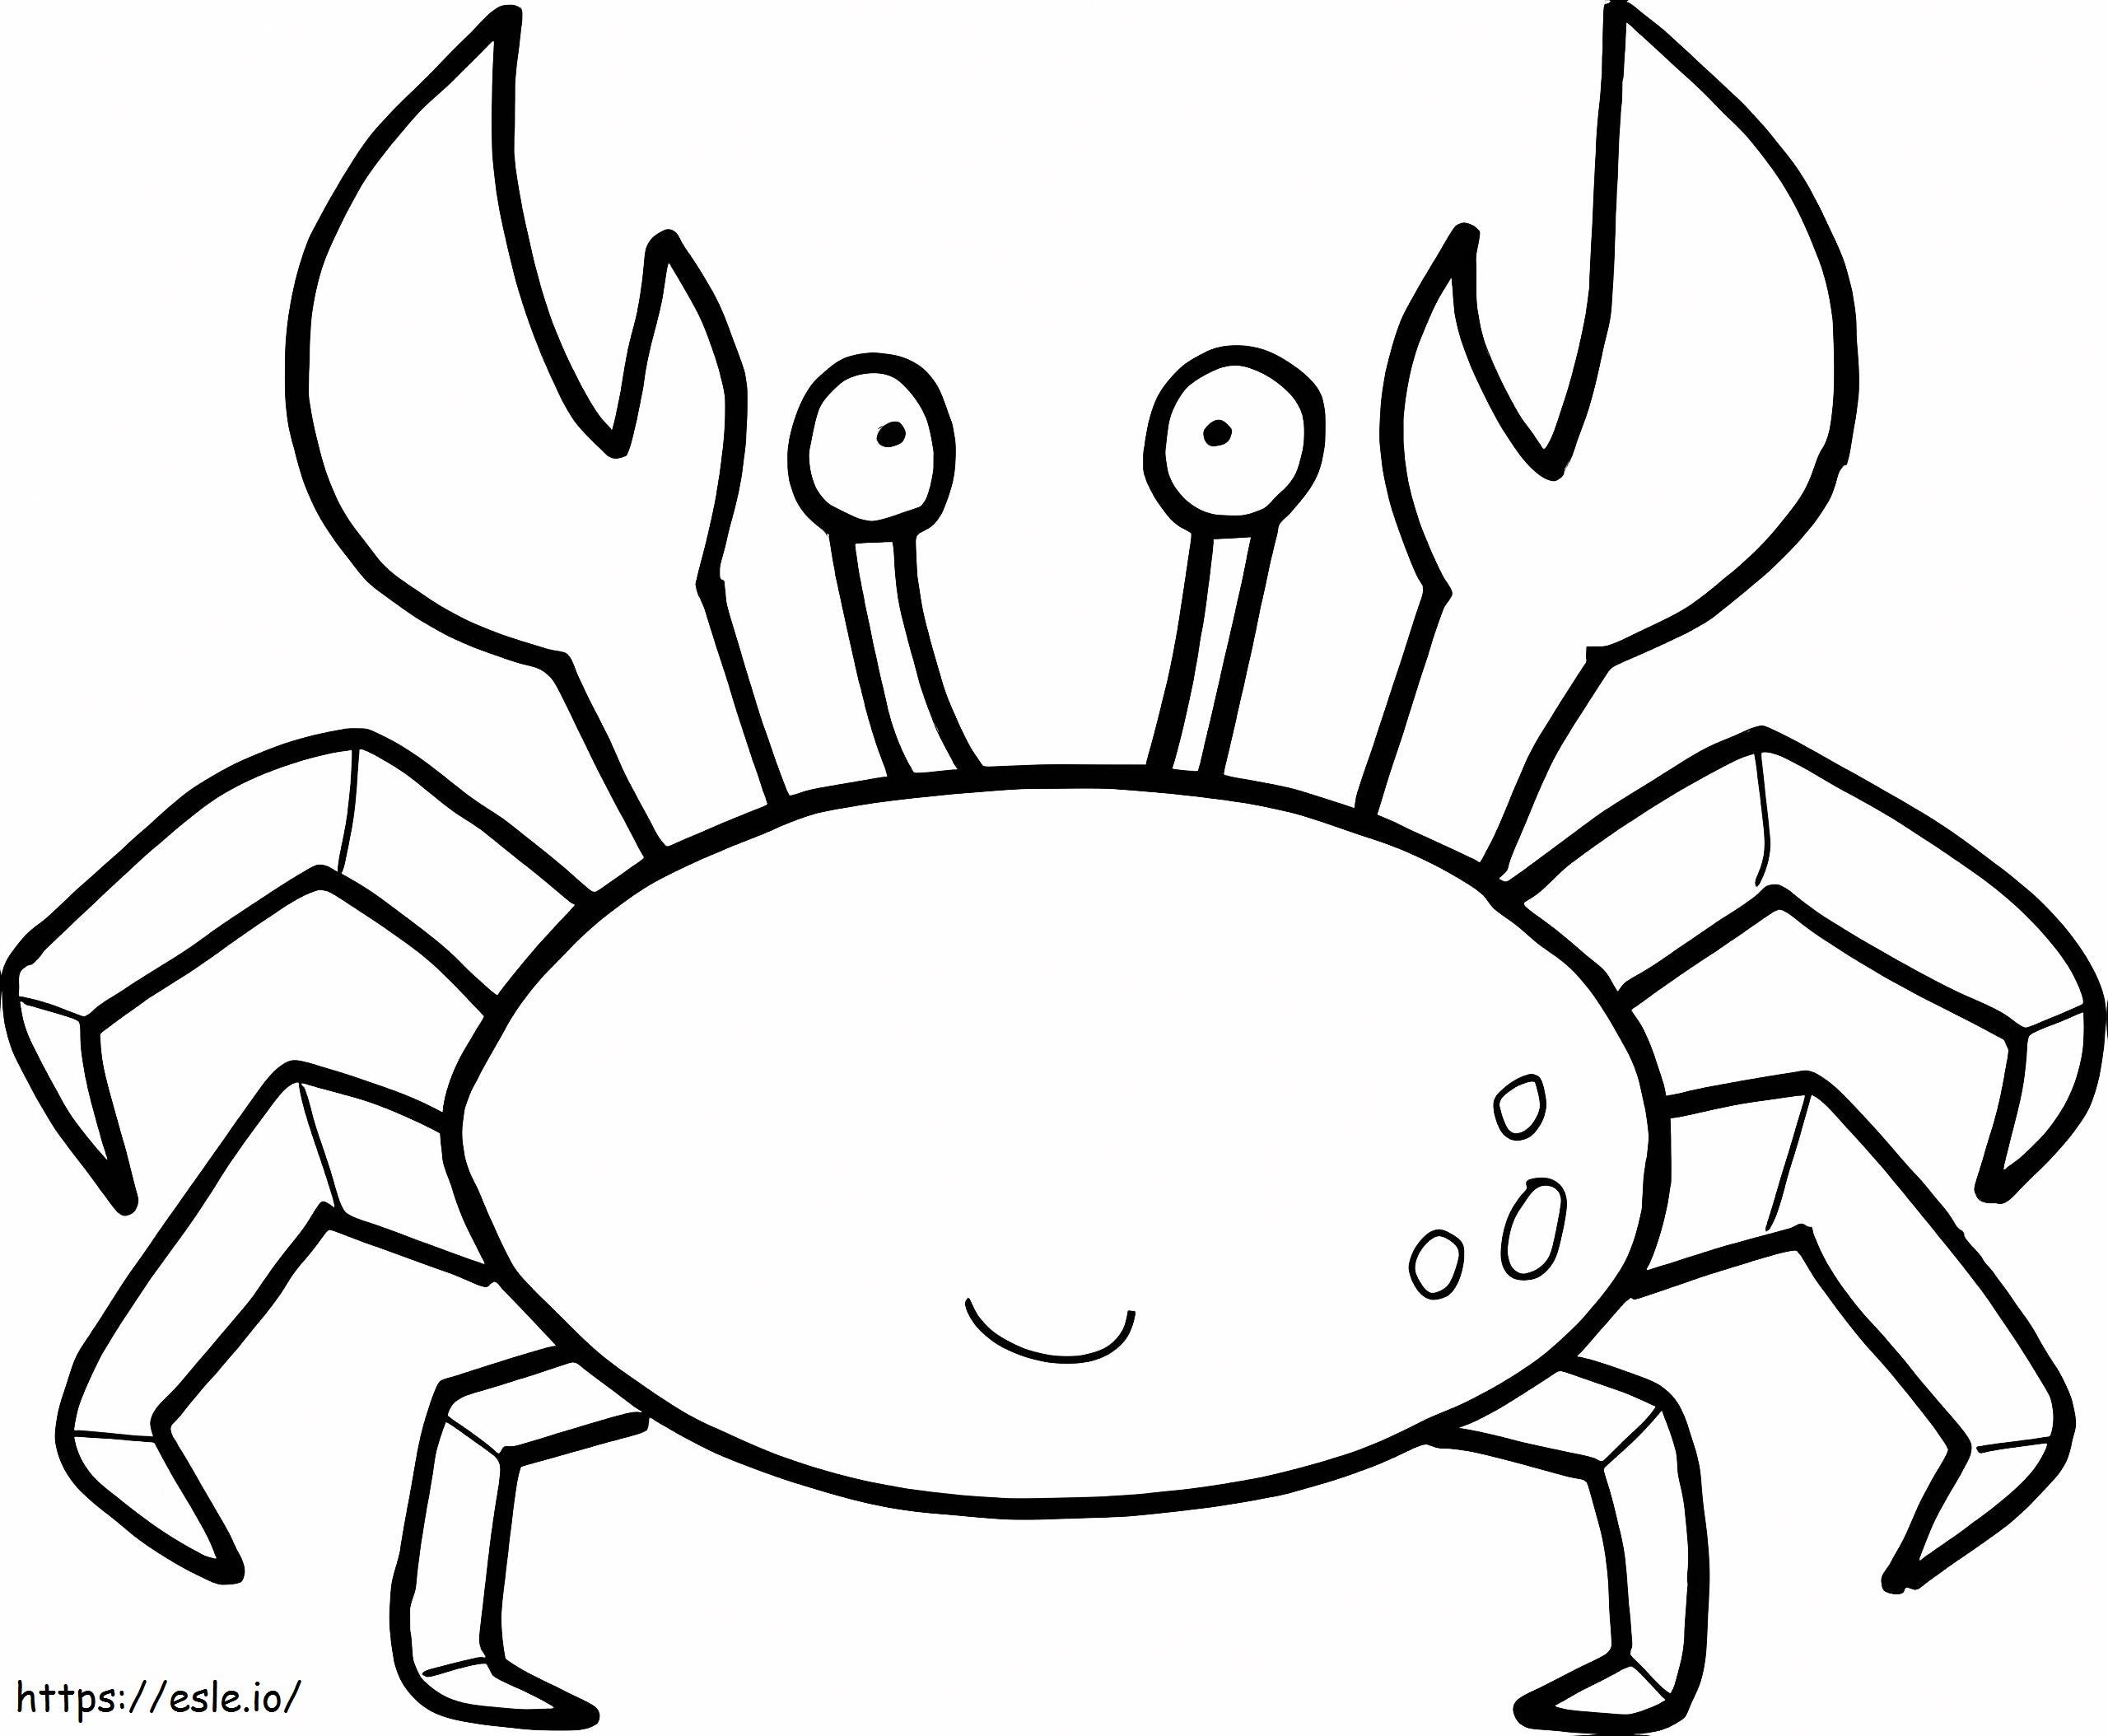 Regular Crab coloring page